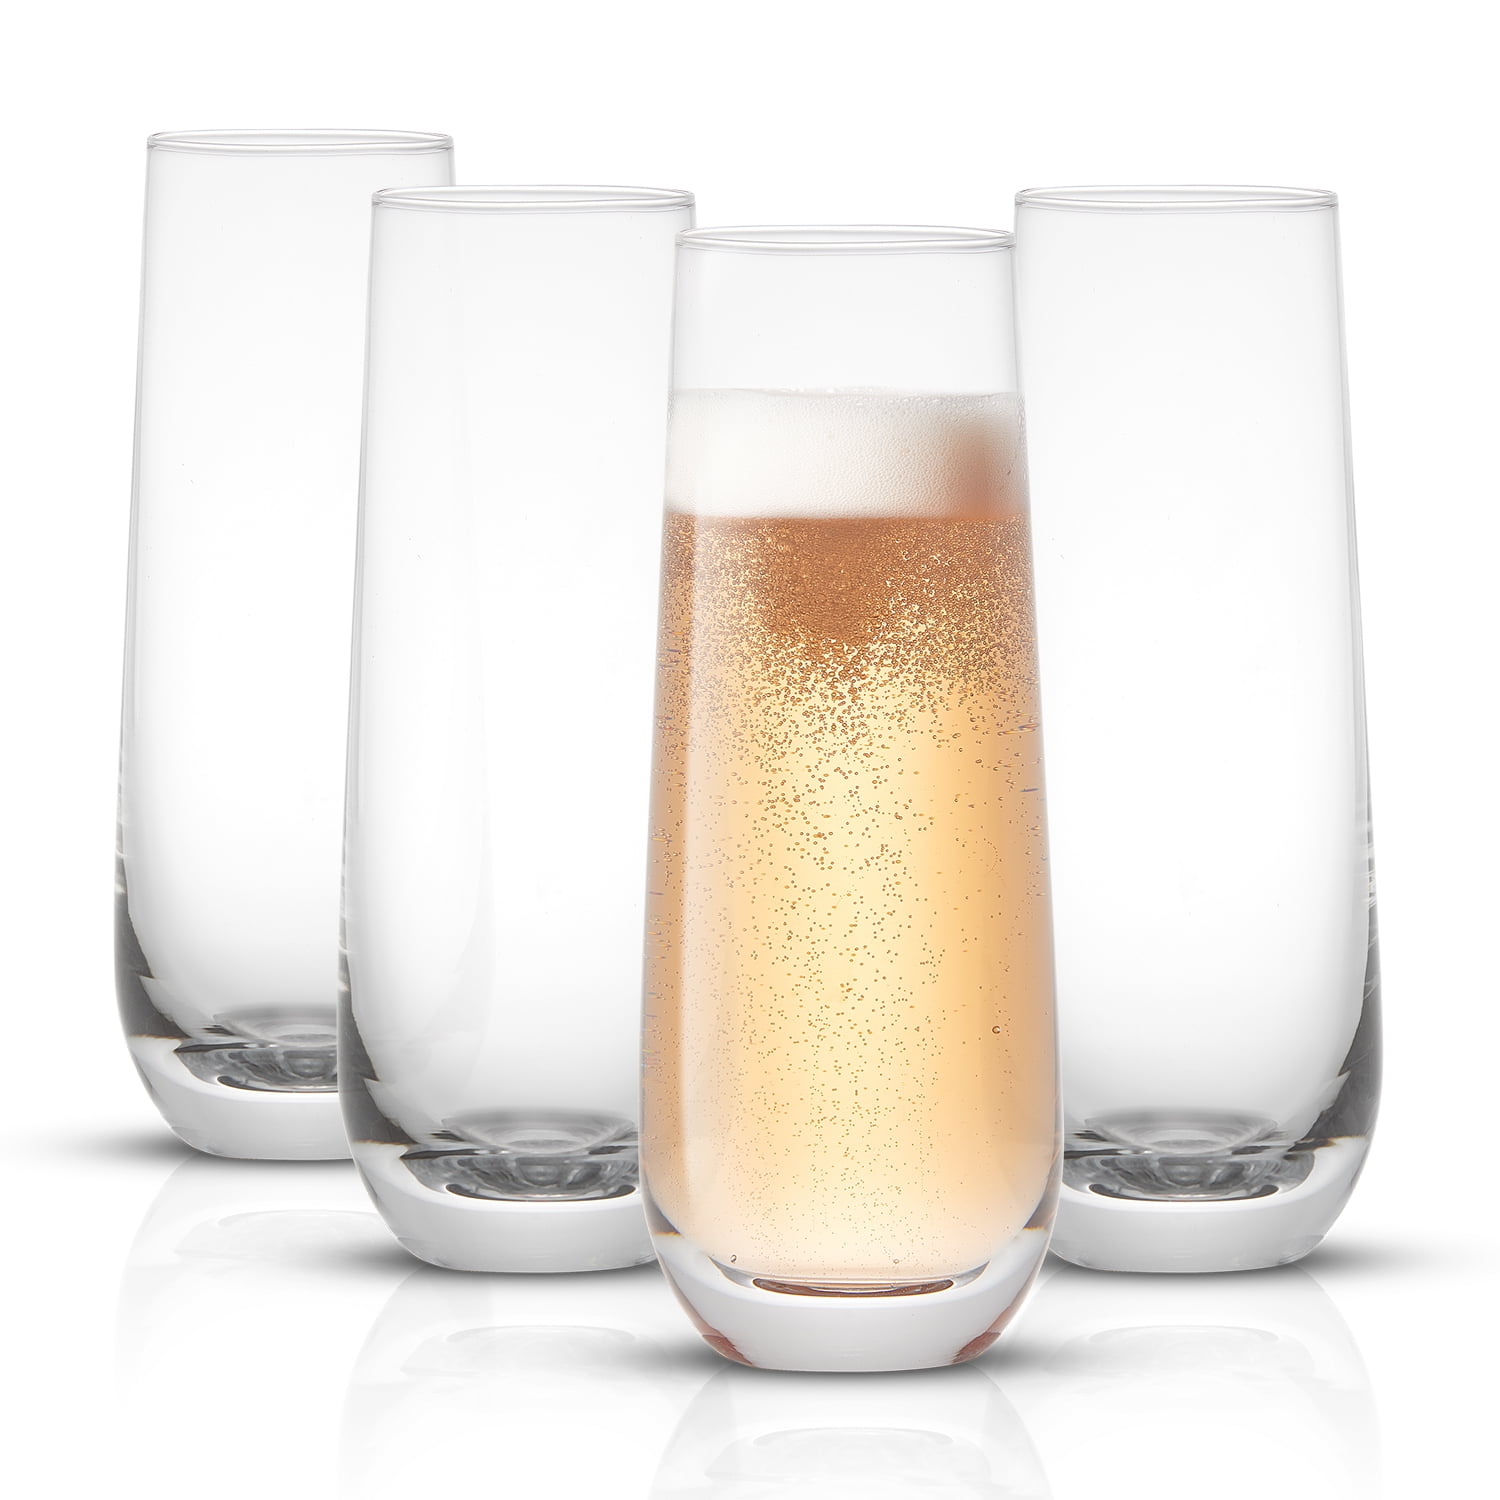 4-Piece 9.4-Oz JoyJolt Milo Stemless Champagne Flutes/ Mimosa Glasses Set $3.40 + Free S&H w/ Walmart+ or $35+